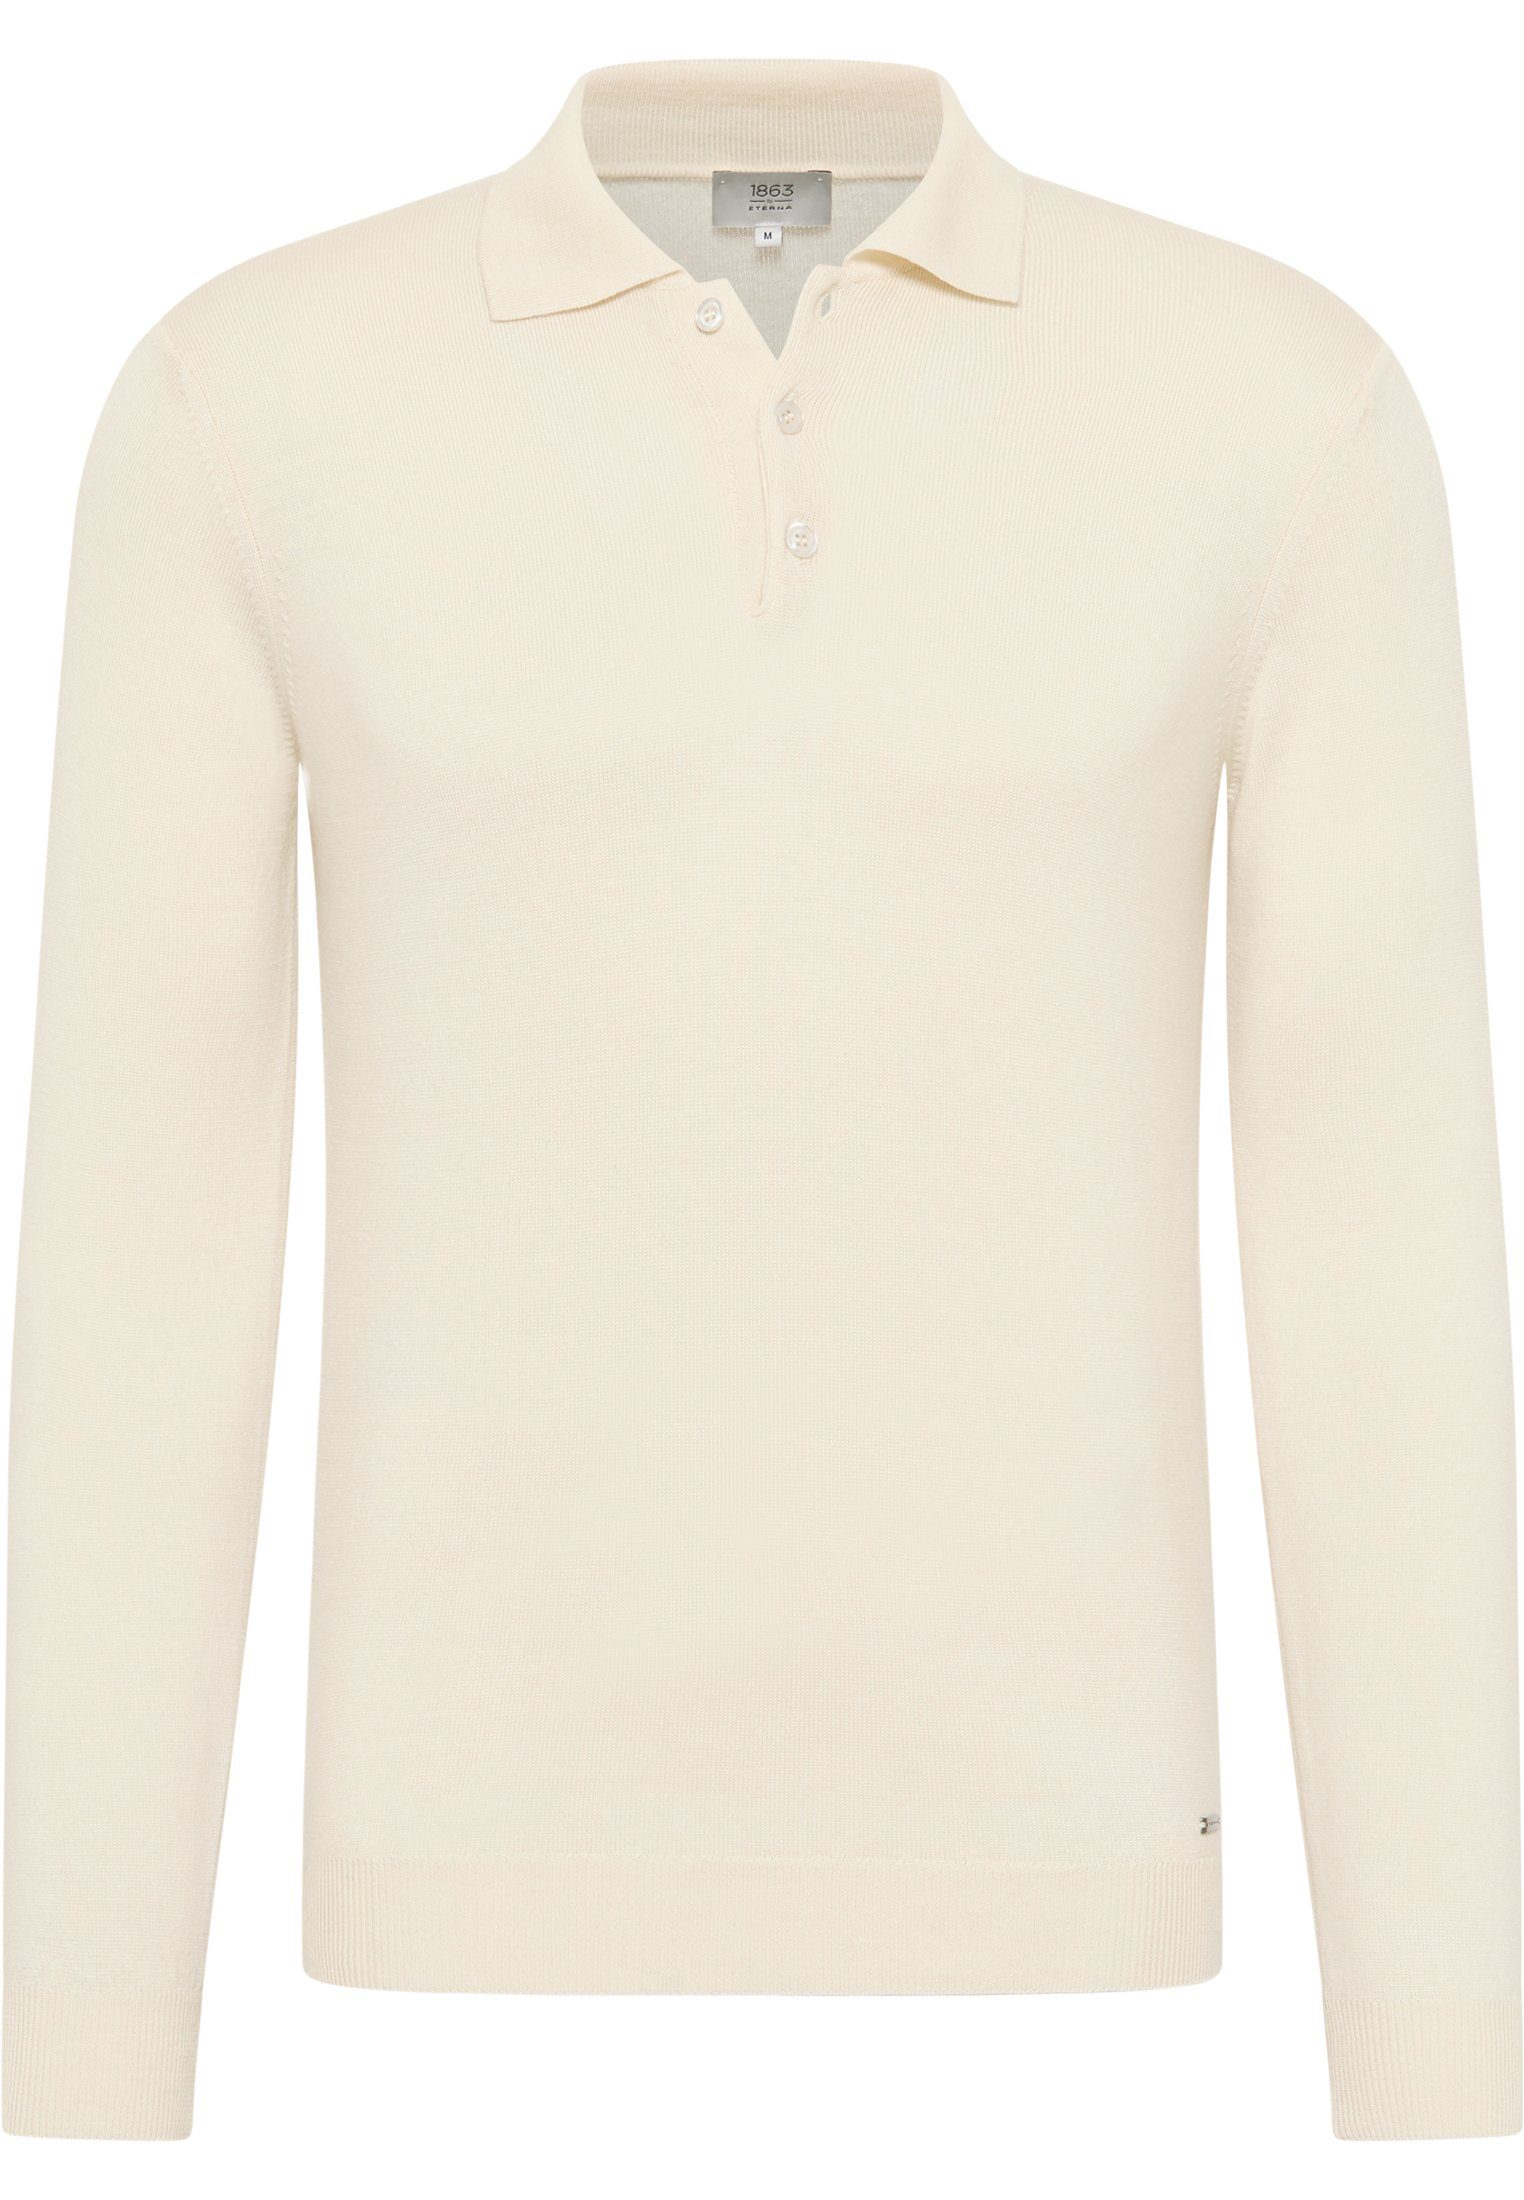 off-white Eterna Langarm-Poloshirt